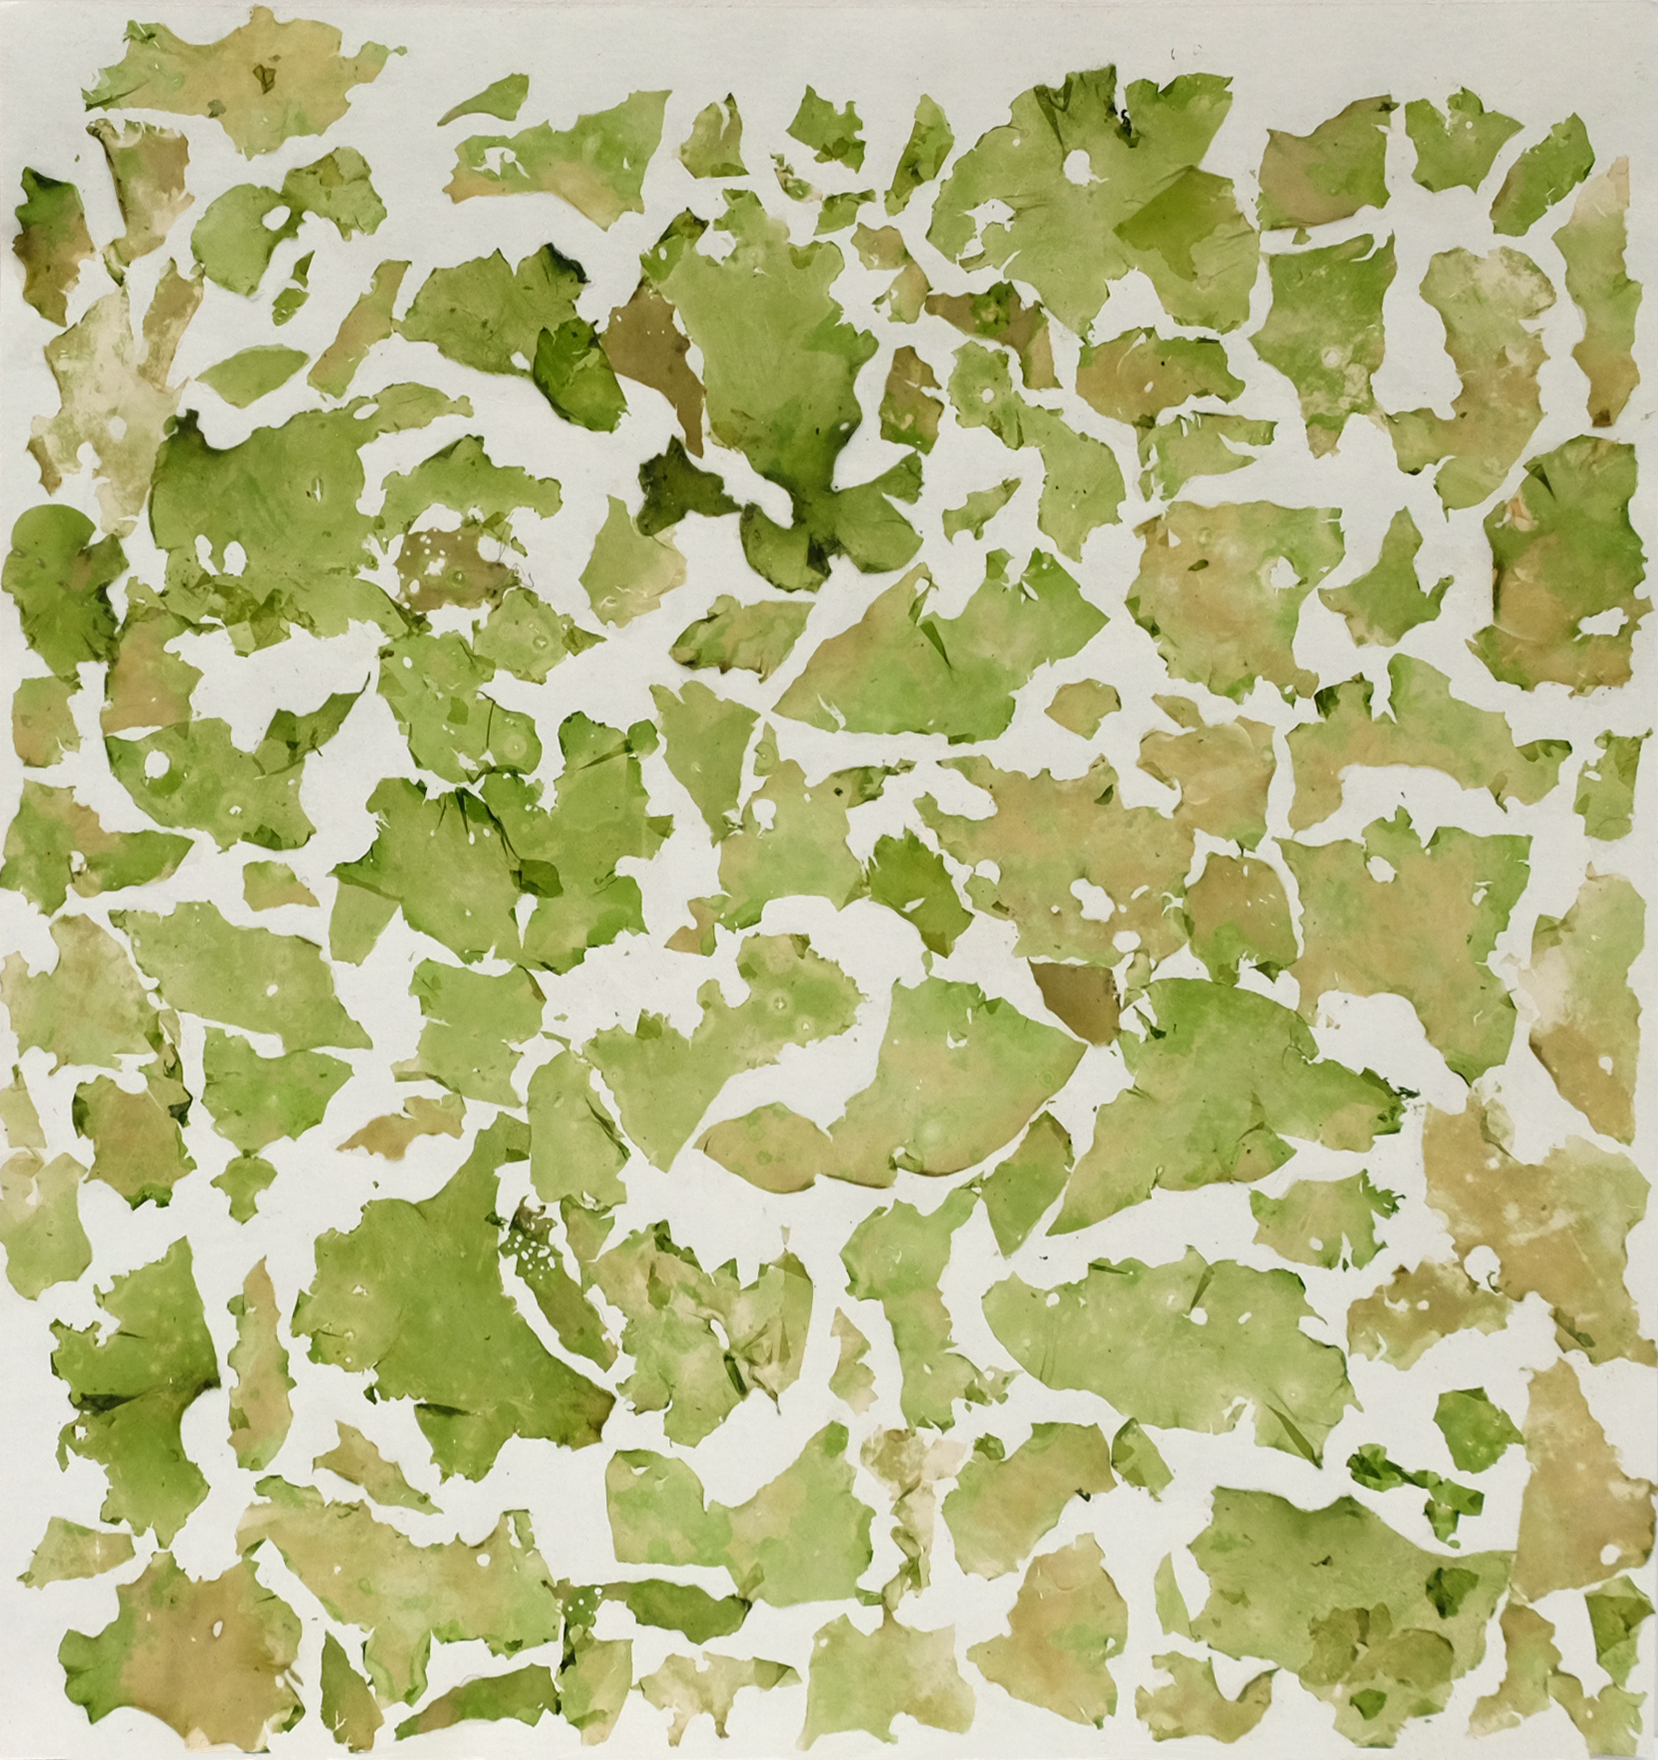 "Gwemon, warec, alga - Laitue de mer", 2006. Herbier, 22,5 x 22,5 cm.